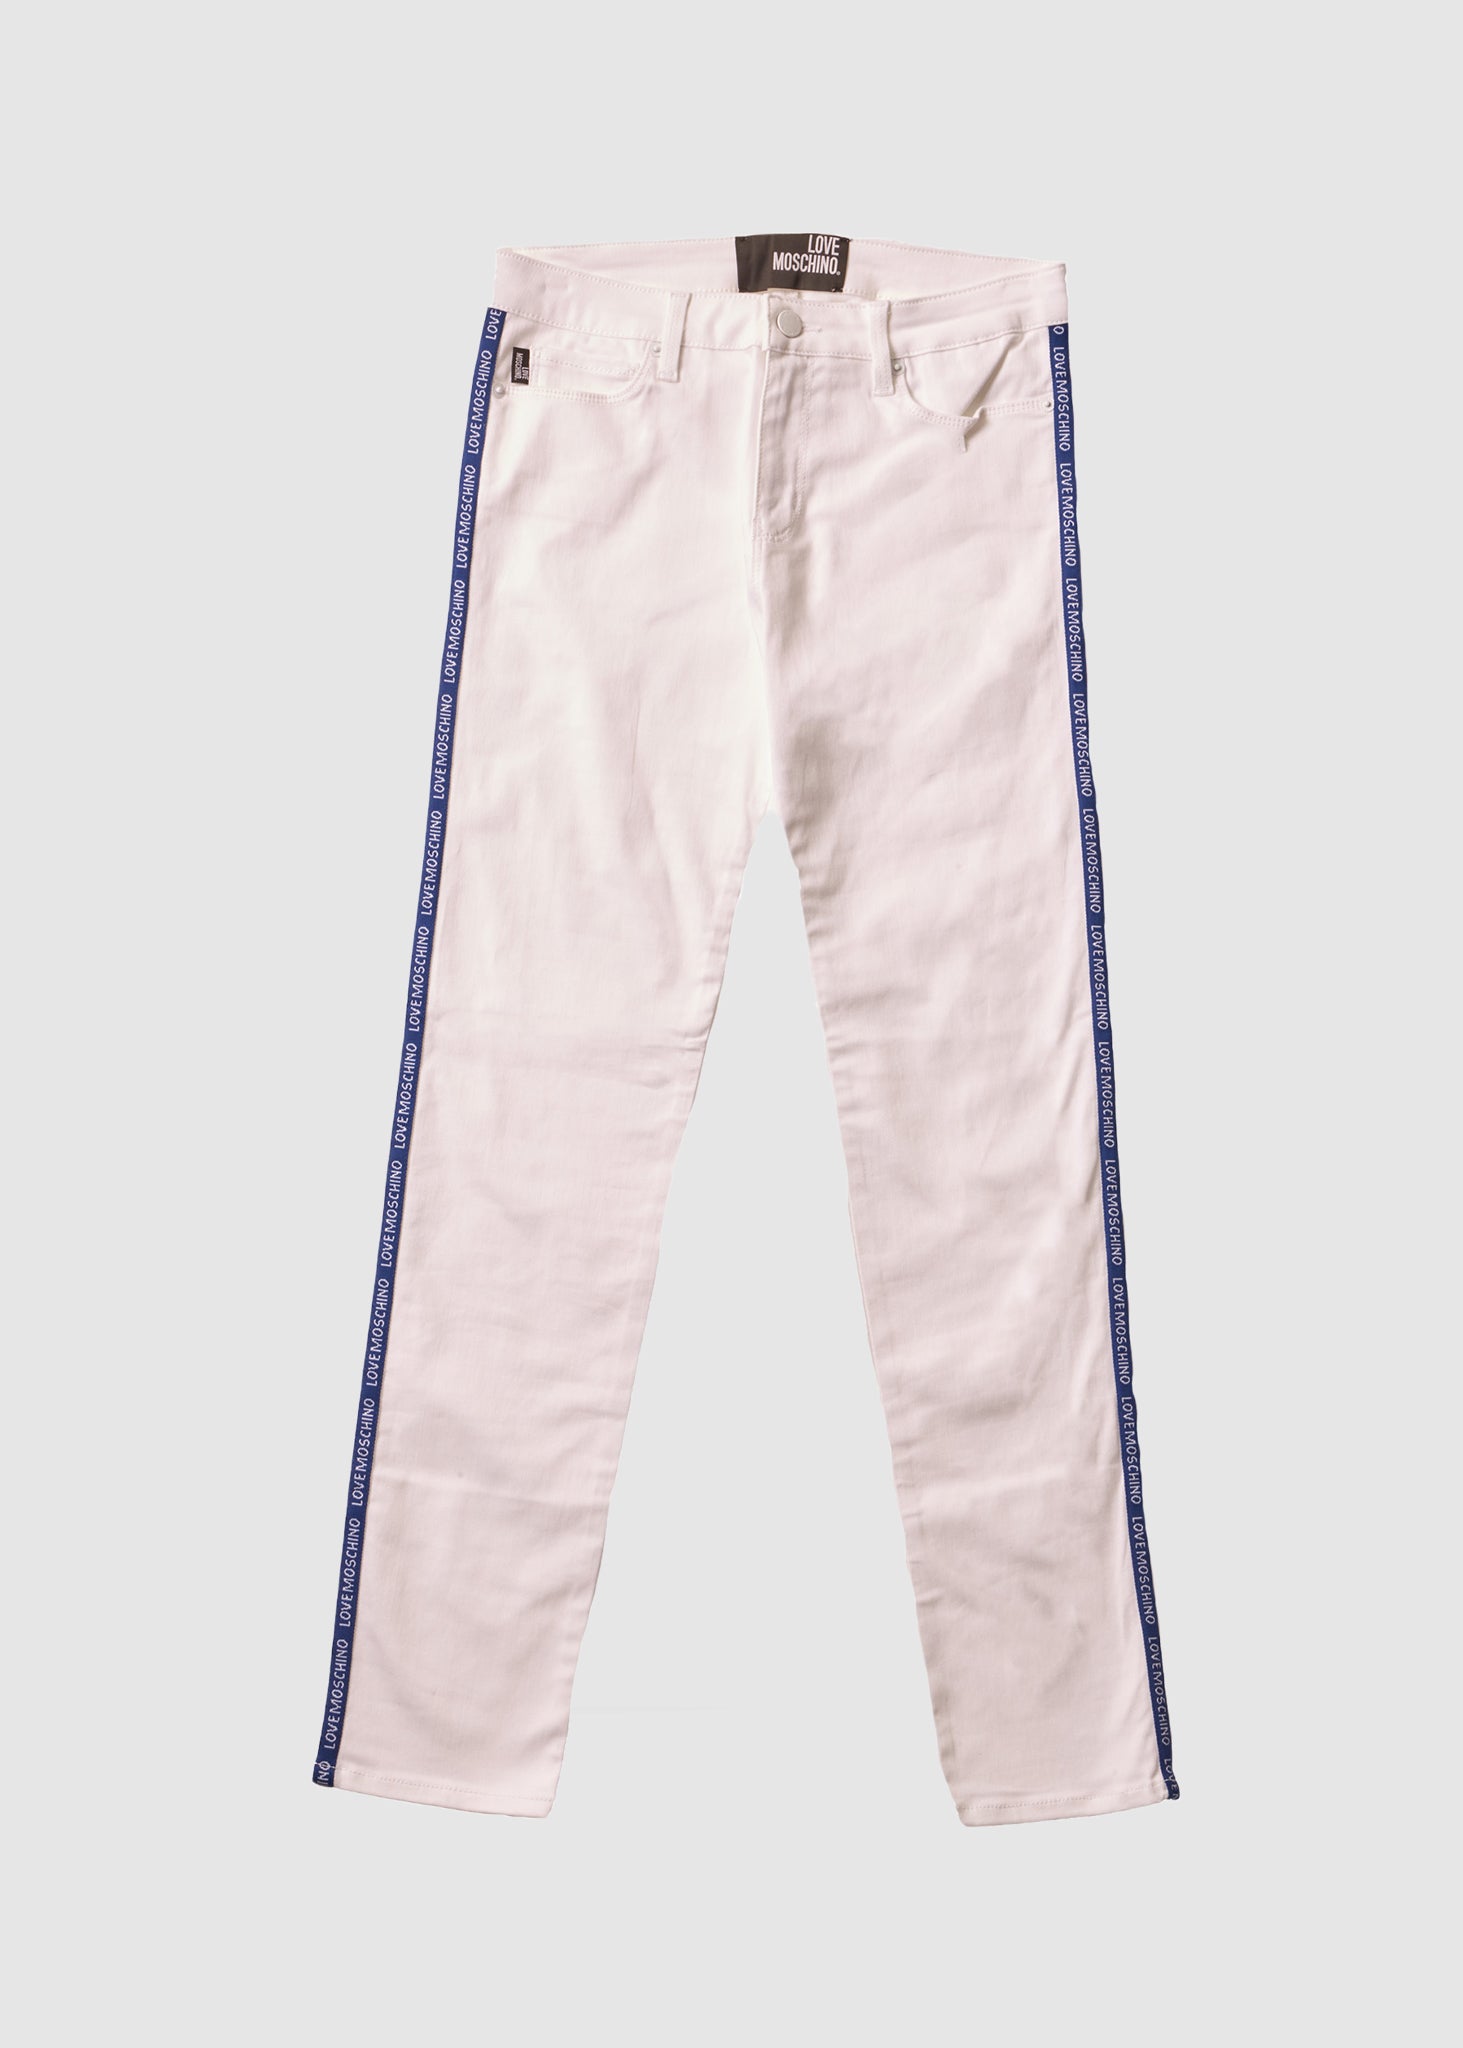 Image of Love Moschino Womens White Taped Denim Jeans